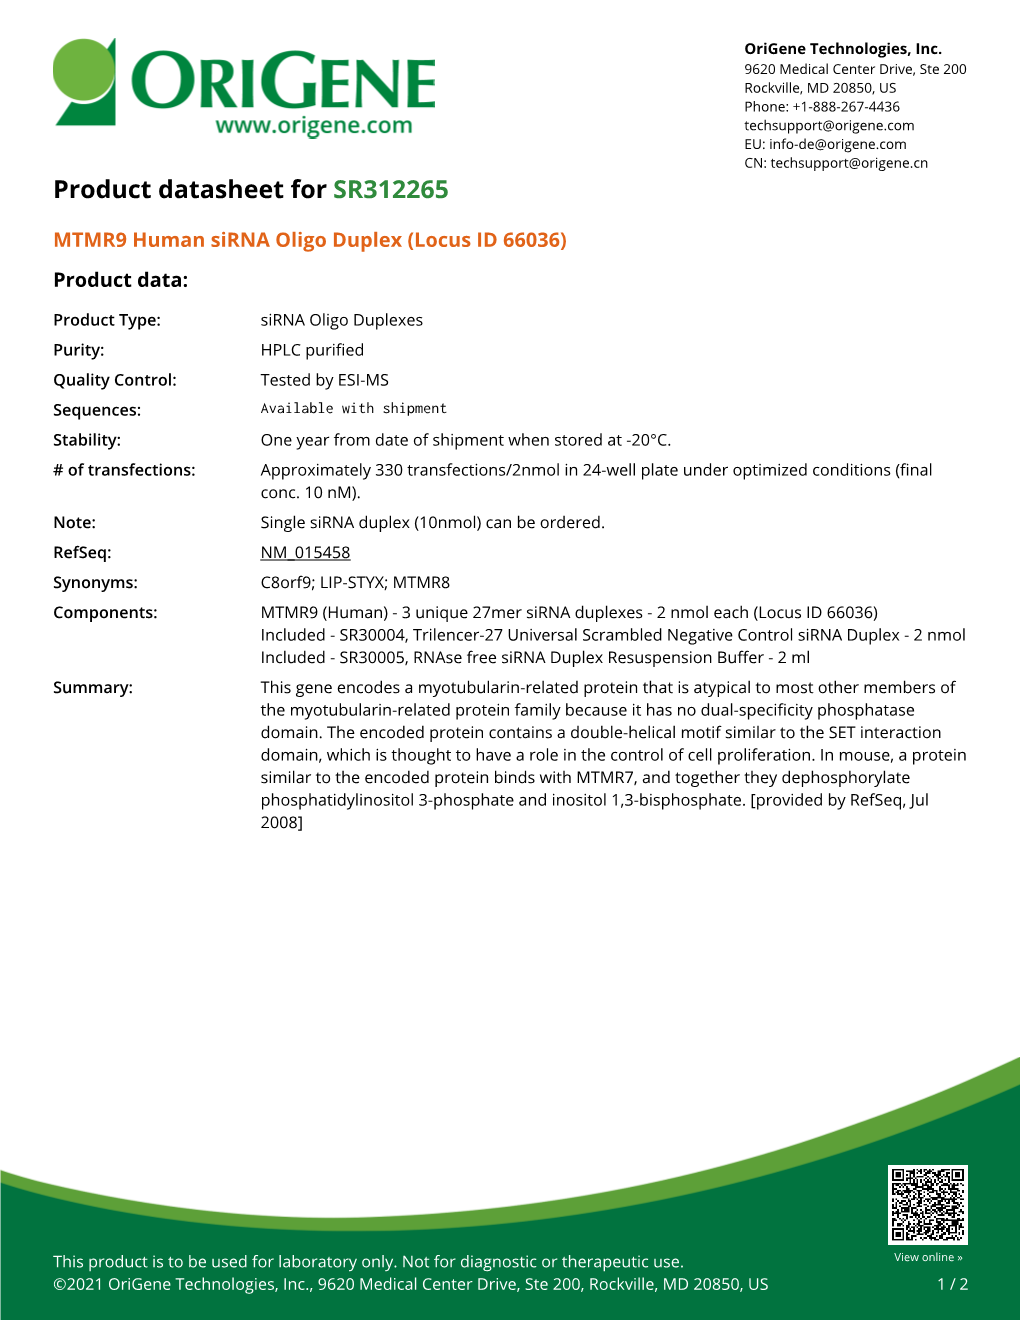 MTMR9 Human Sirna Oligo Duplex (Locus ID 66036) Product Data